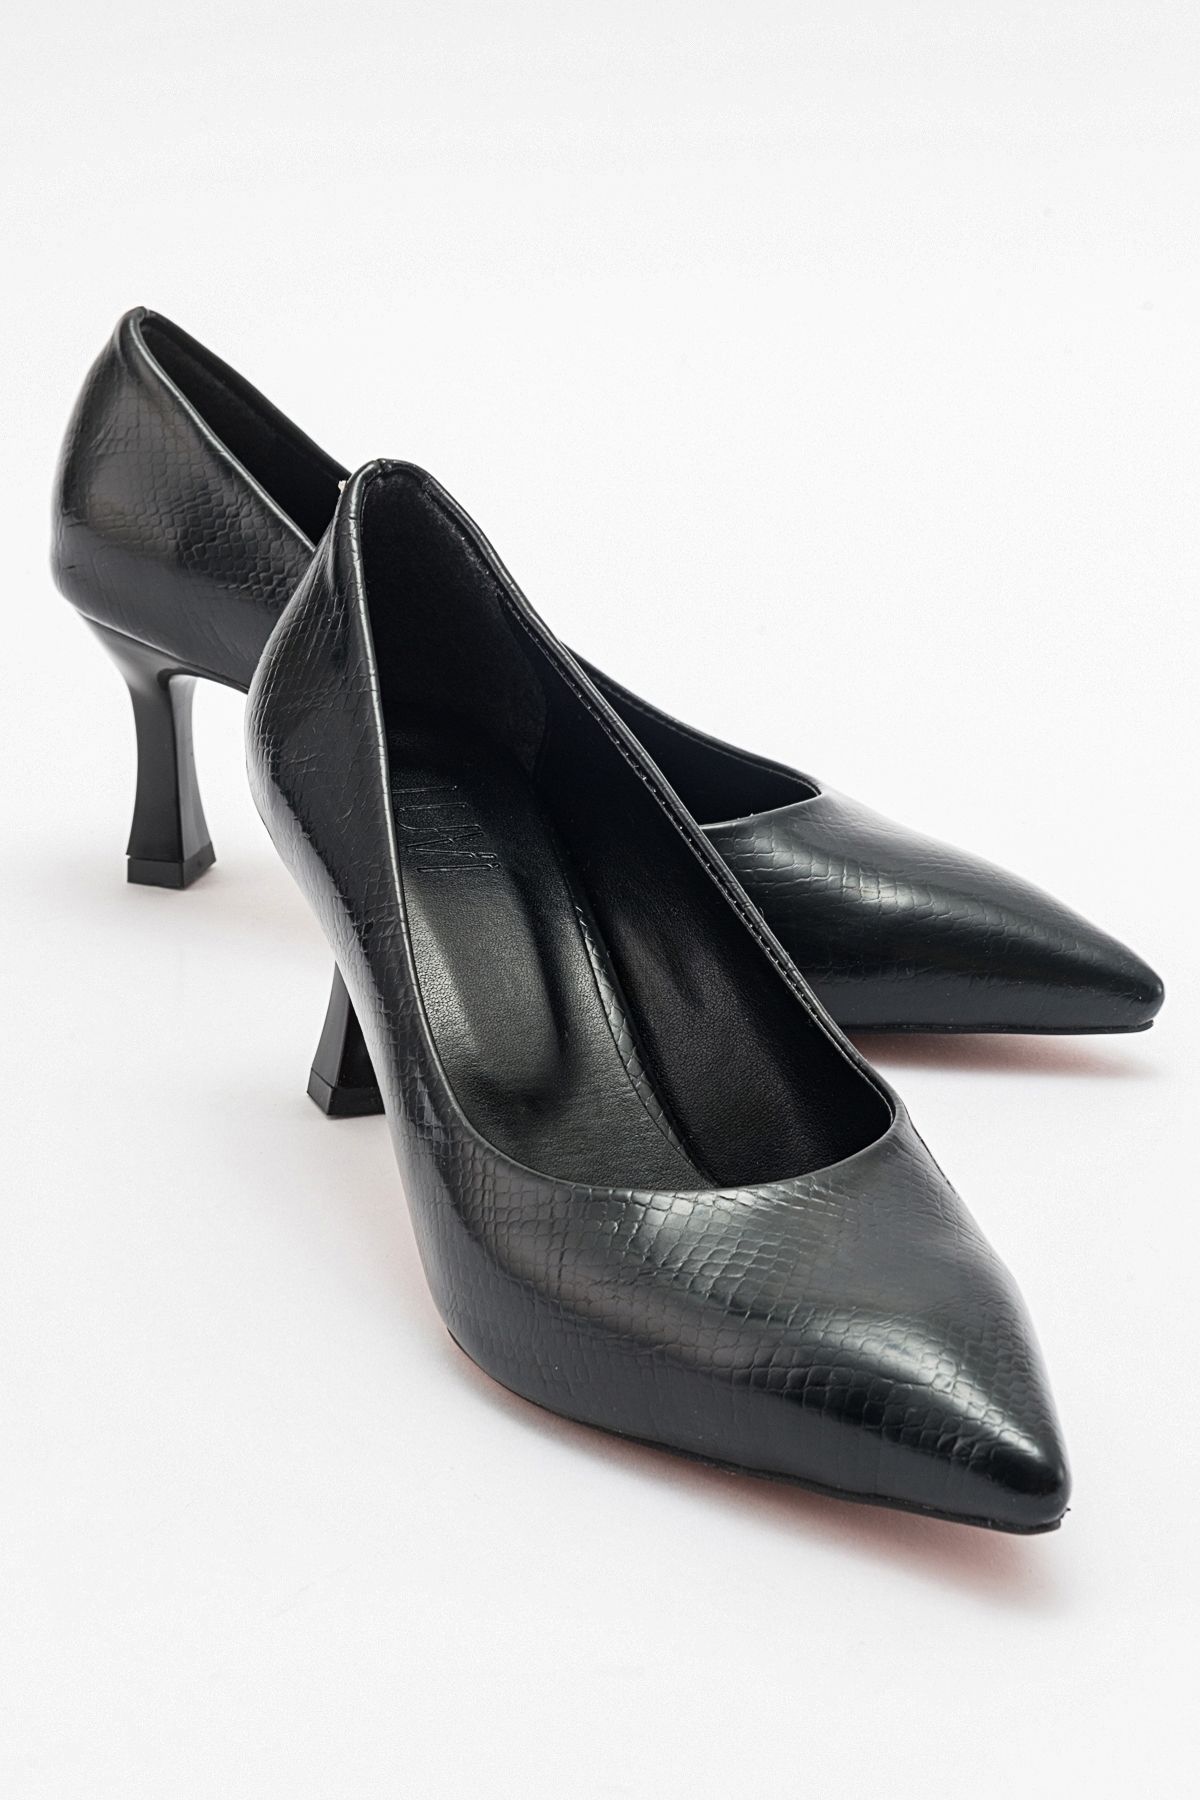 luvishoes PEDRA Siyah Baskı Kadın Topuklu Ayakkabı